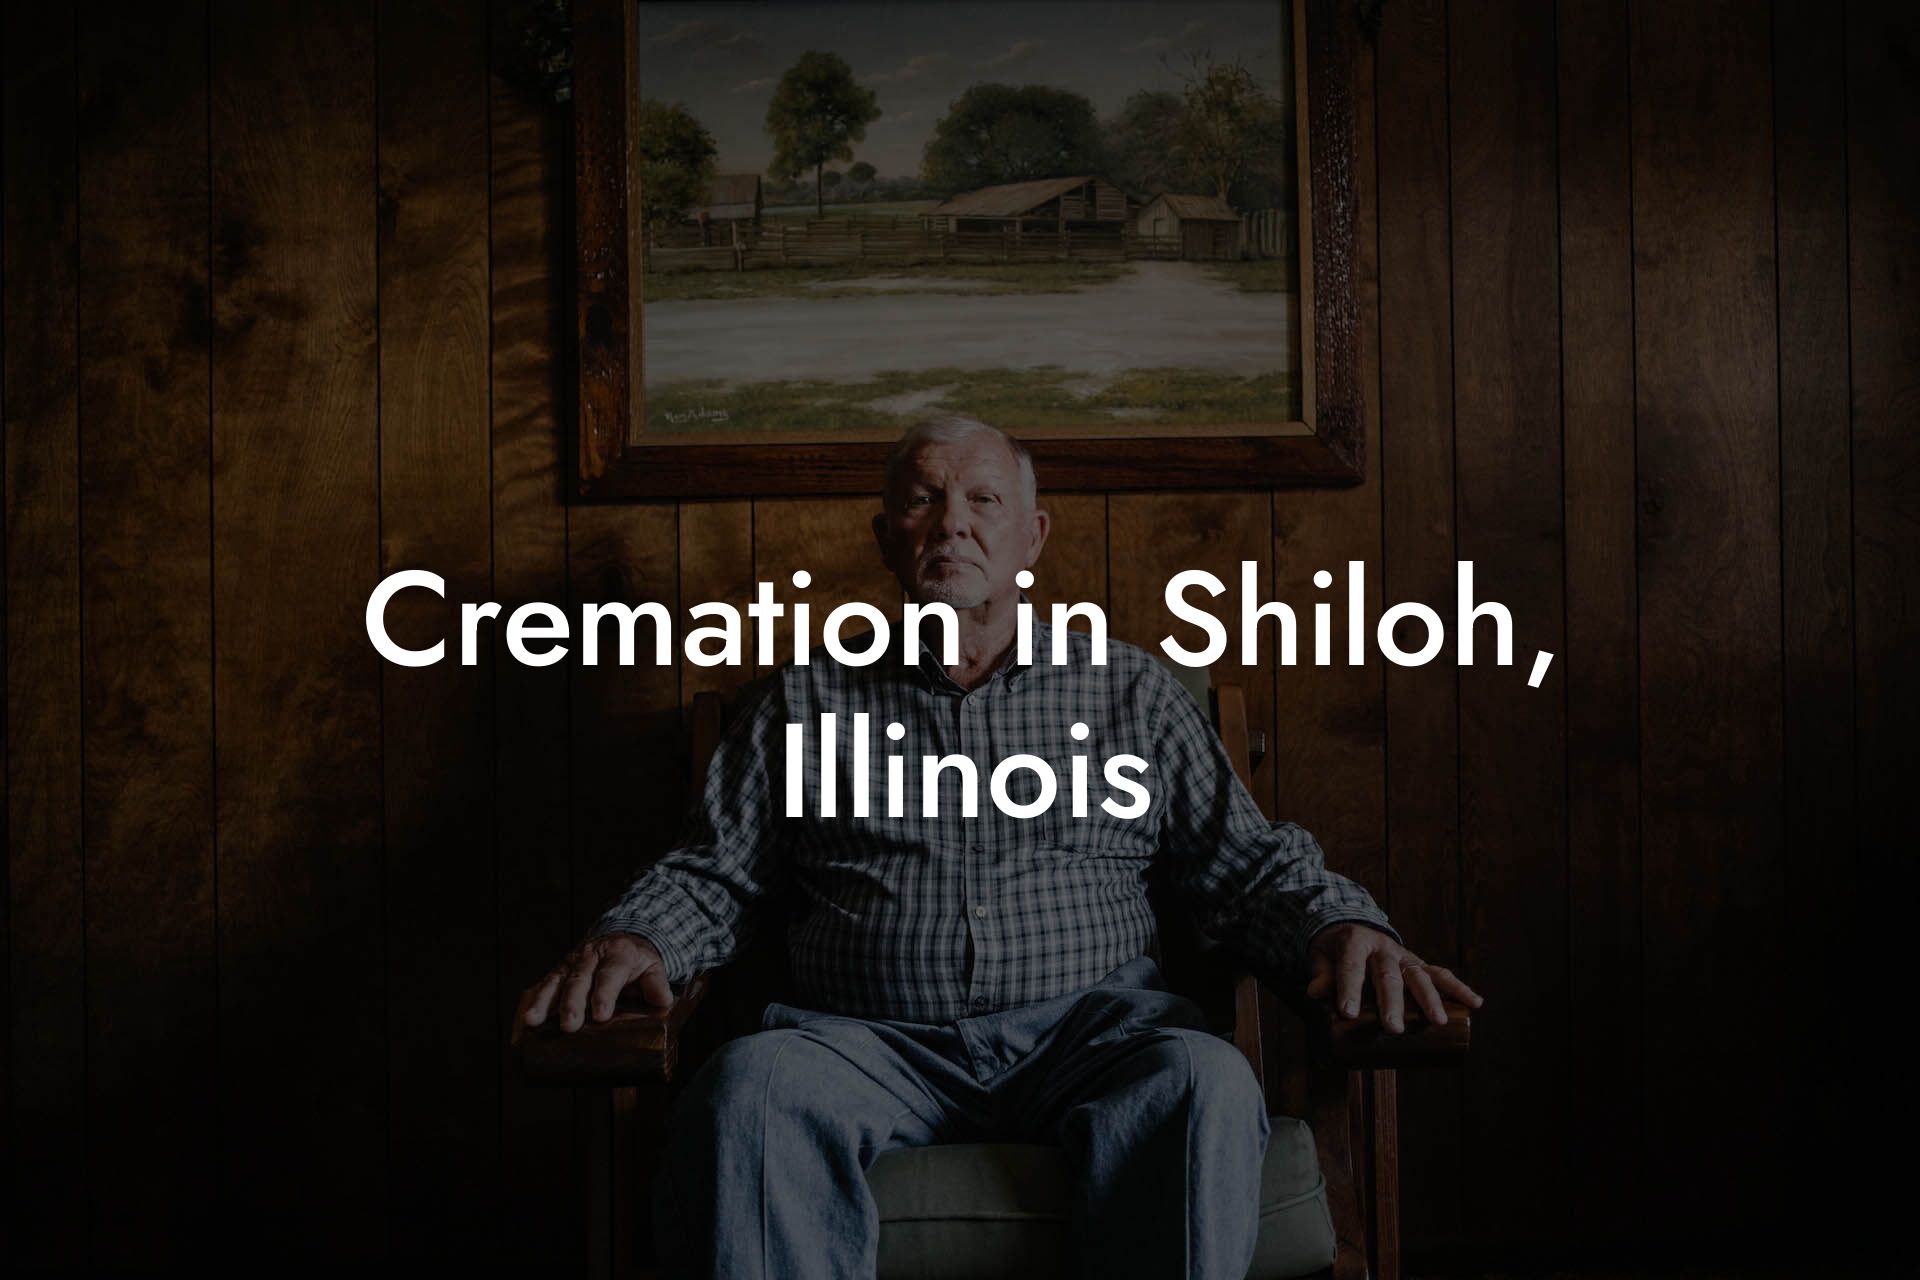 Cremation in Shiloh, Illinois